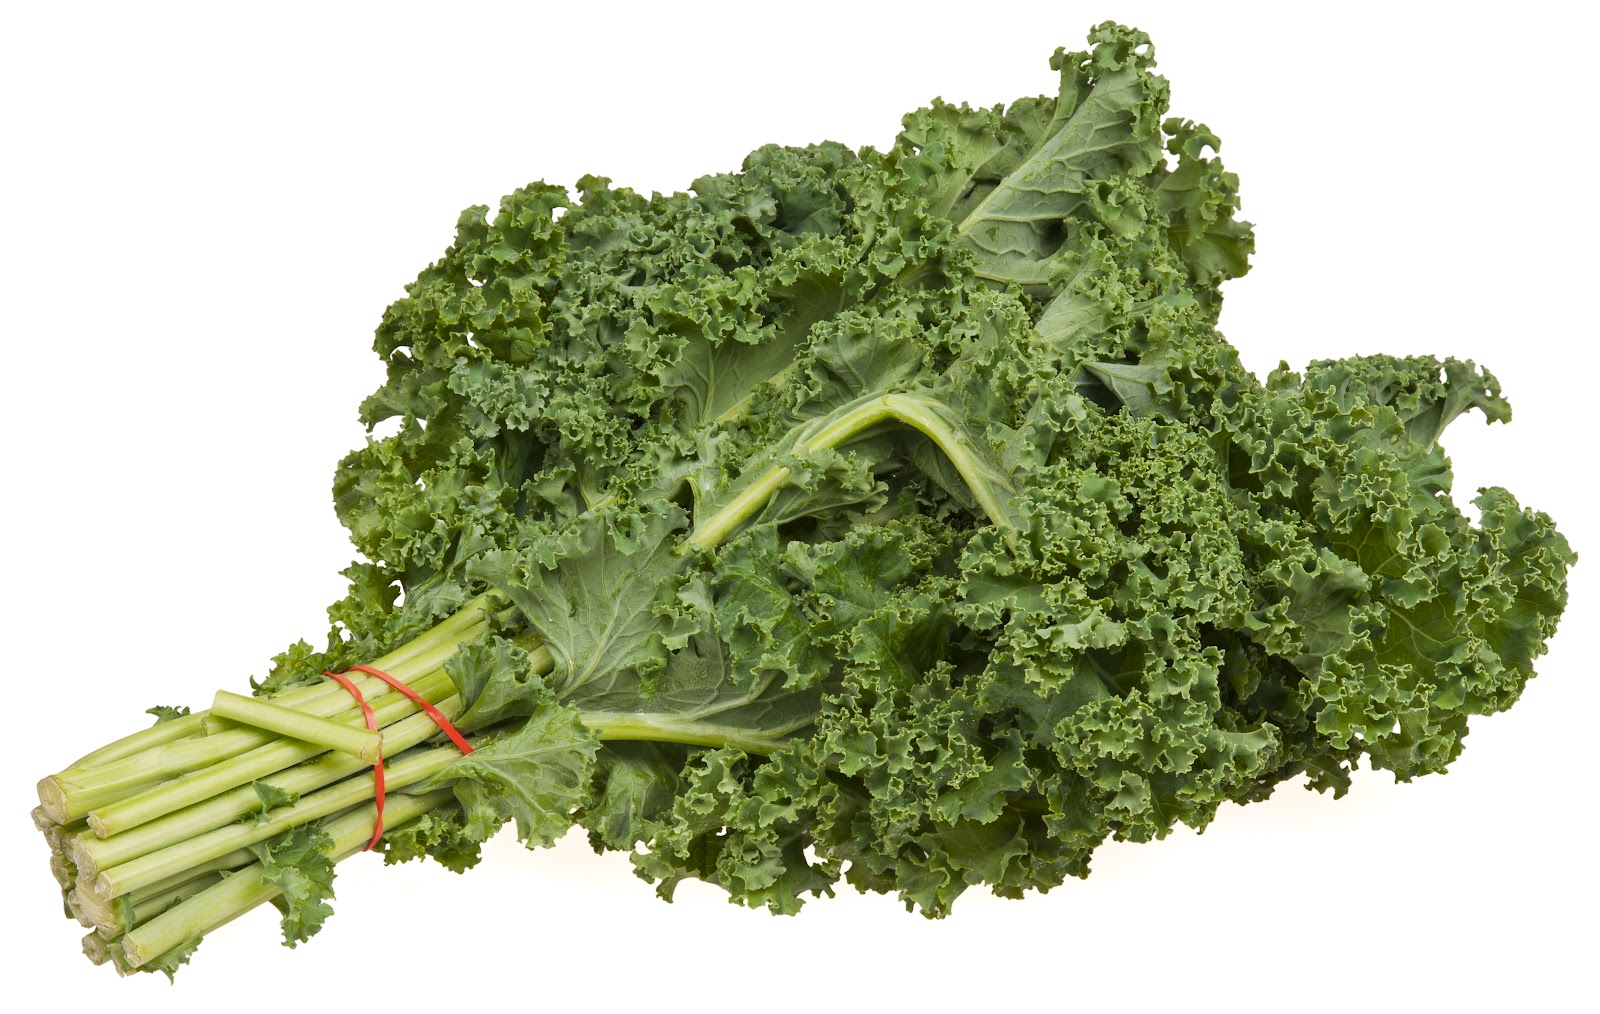 File:Kale-Bundle.jpg - Wikimedia Commons